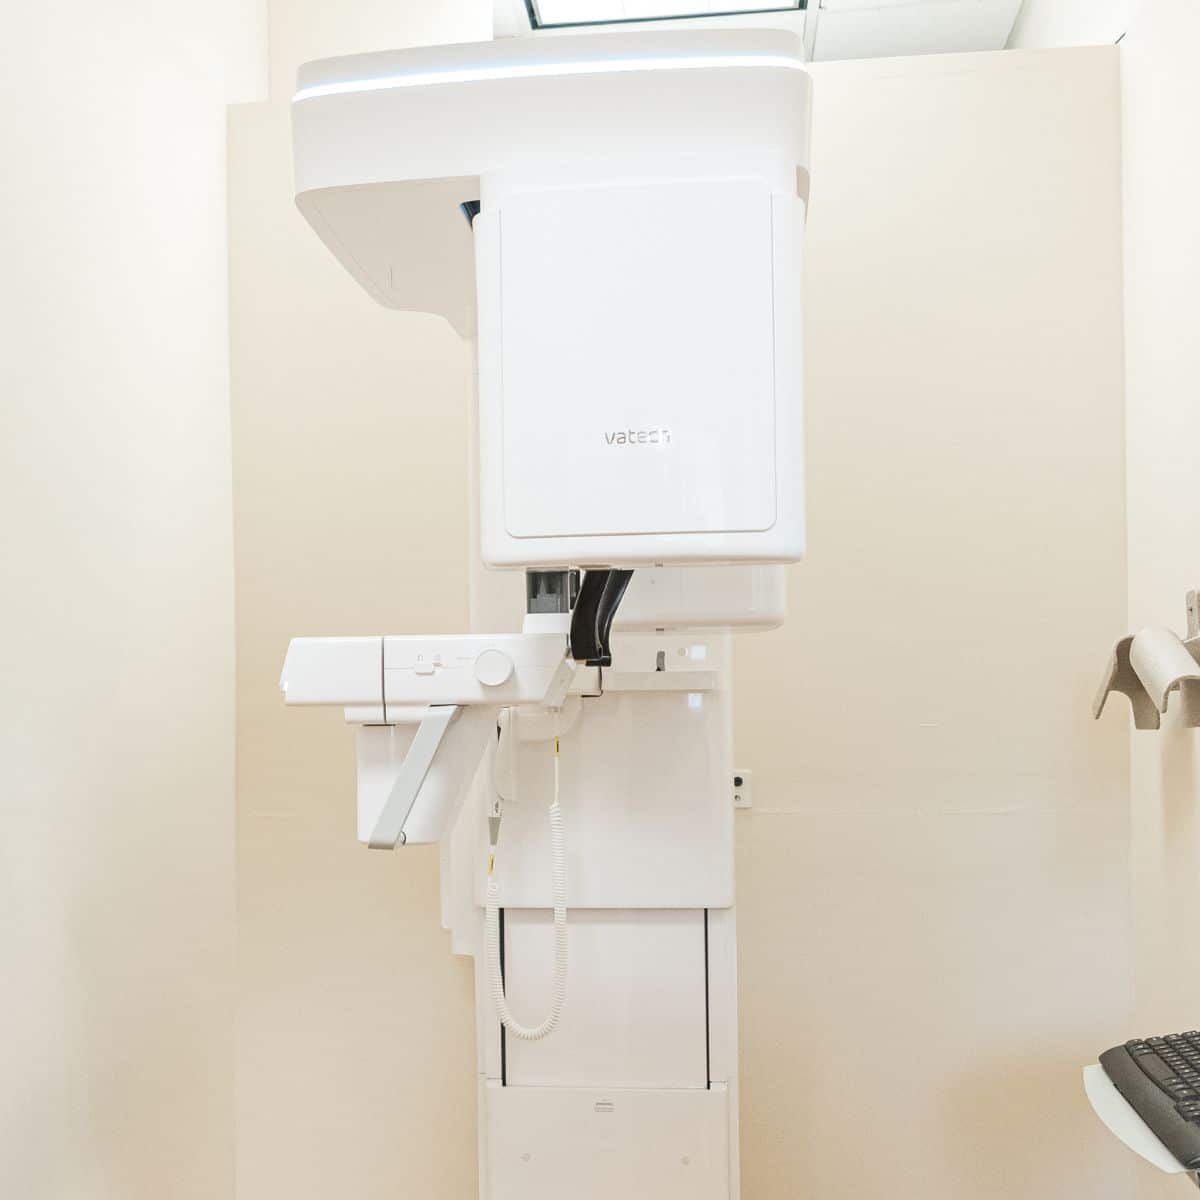 3D Cone Beam CT machine